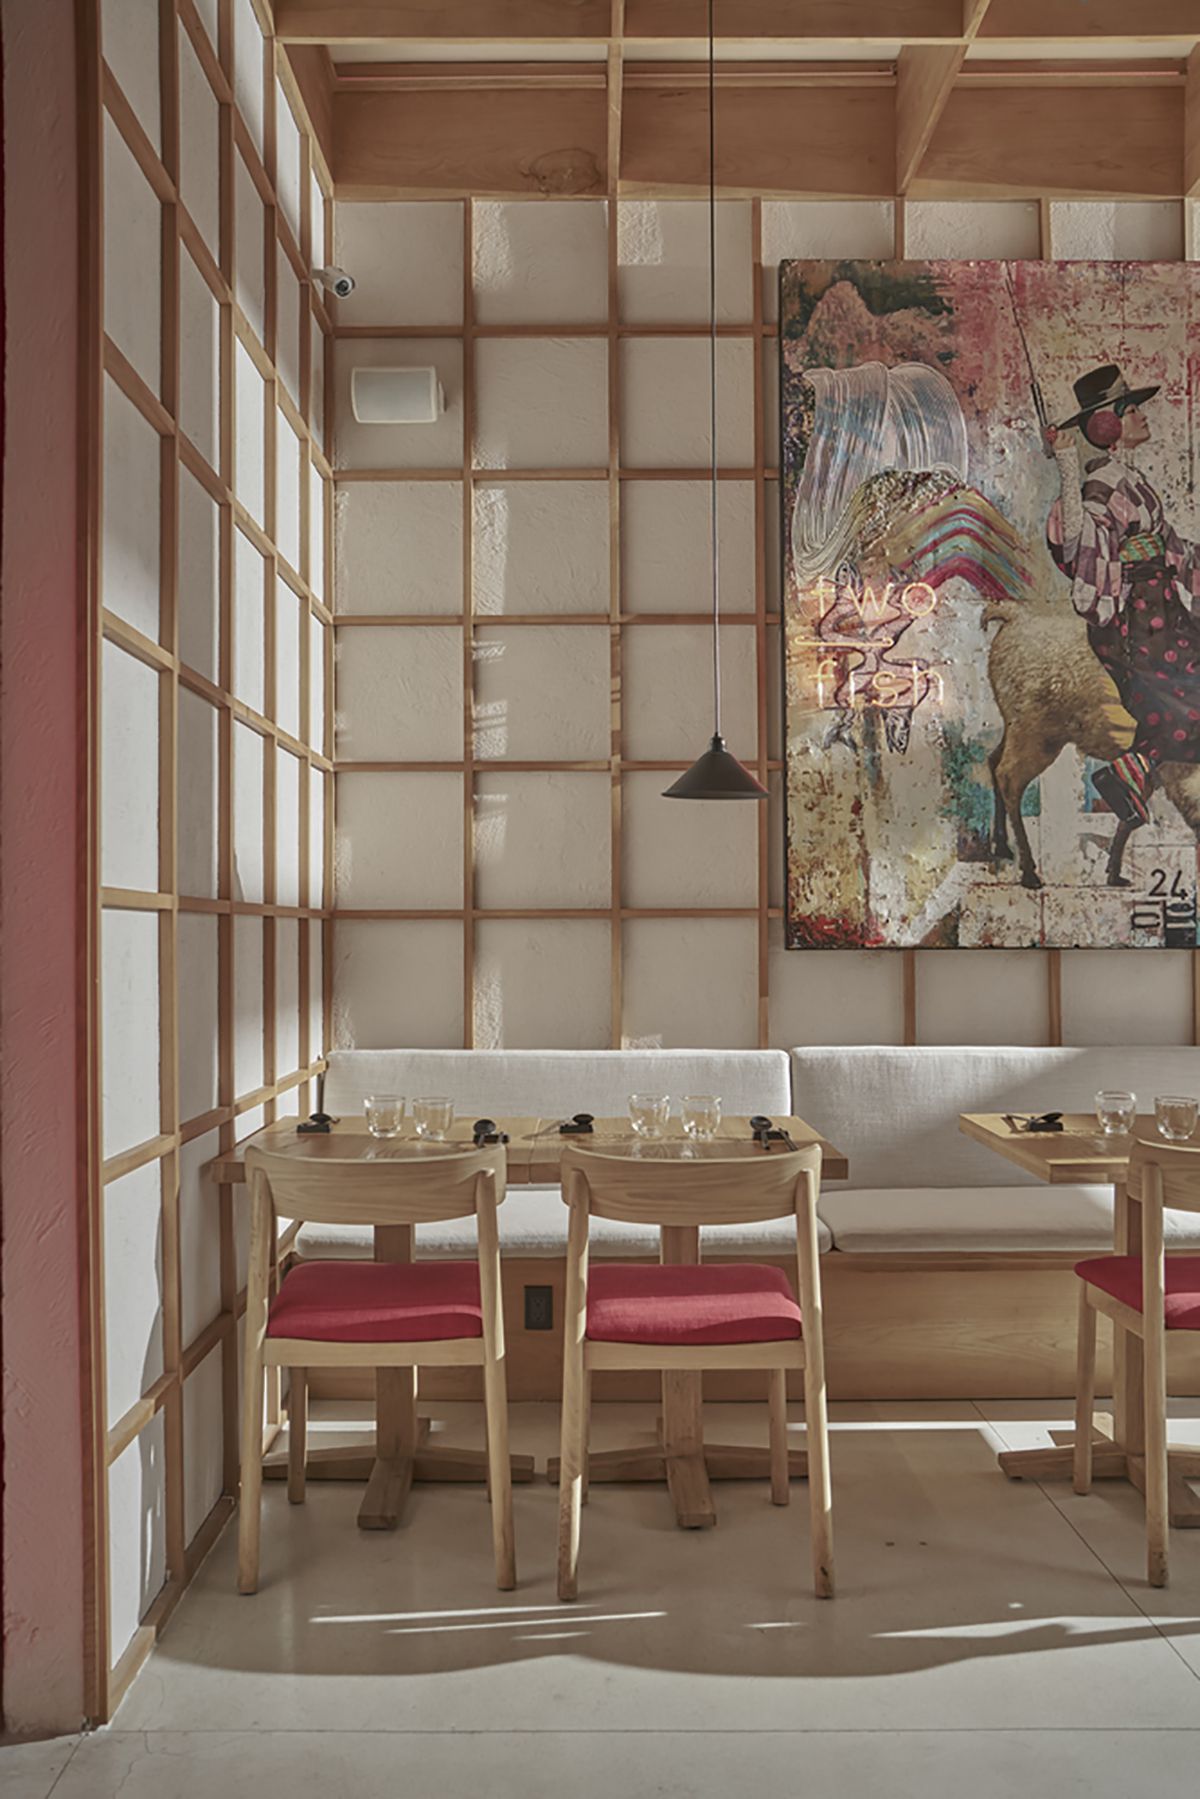 kienviet tinto nikkei cuisine and bar studioduo architecture 1 6